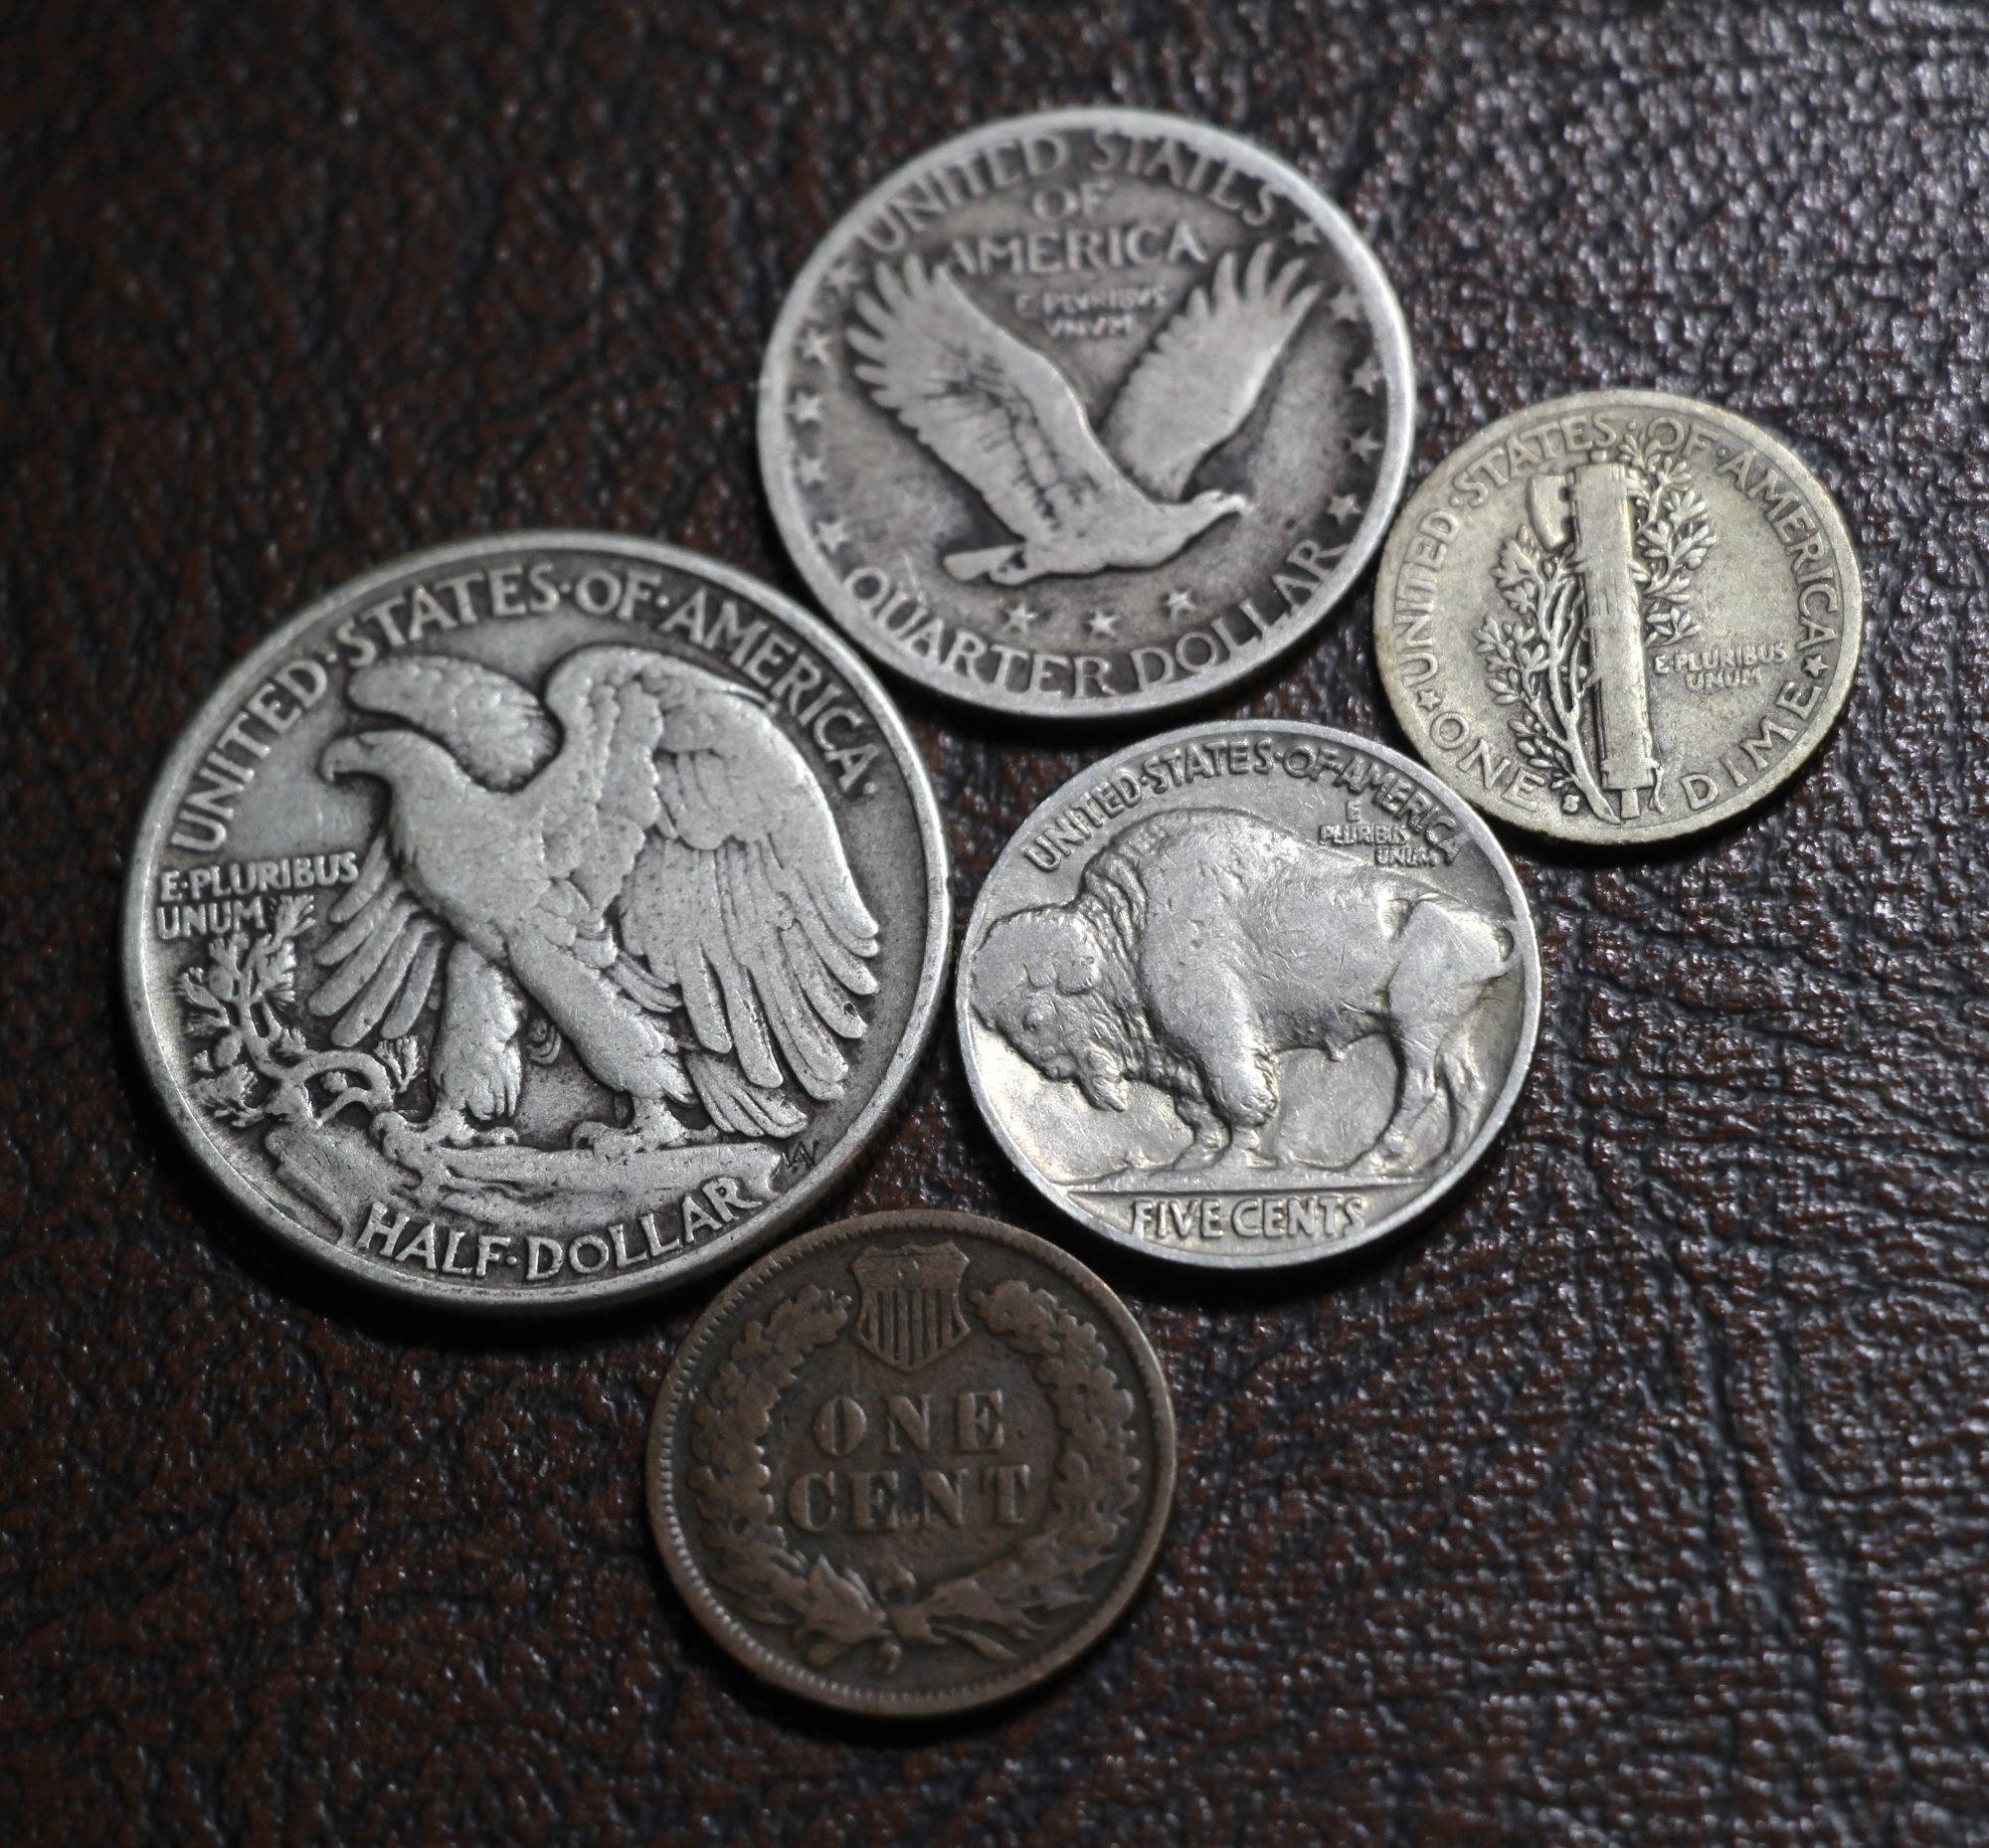 Old U.S. Coins Silver 5-Coin Set - Original Skin Coins